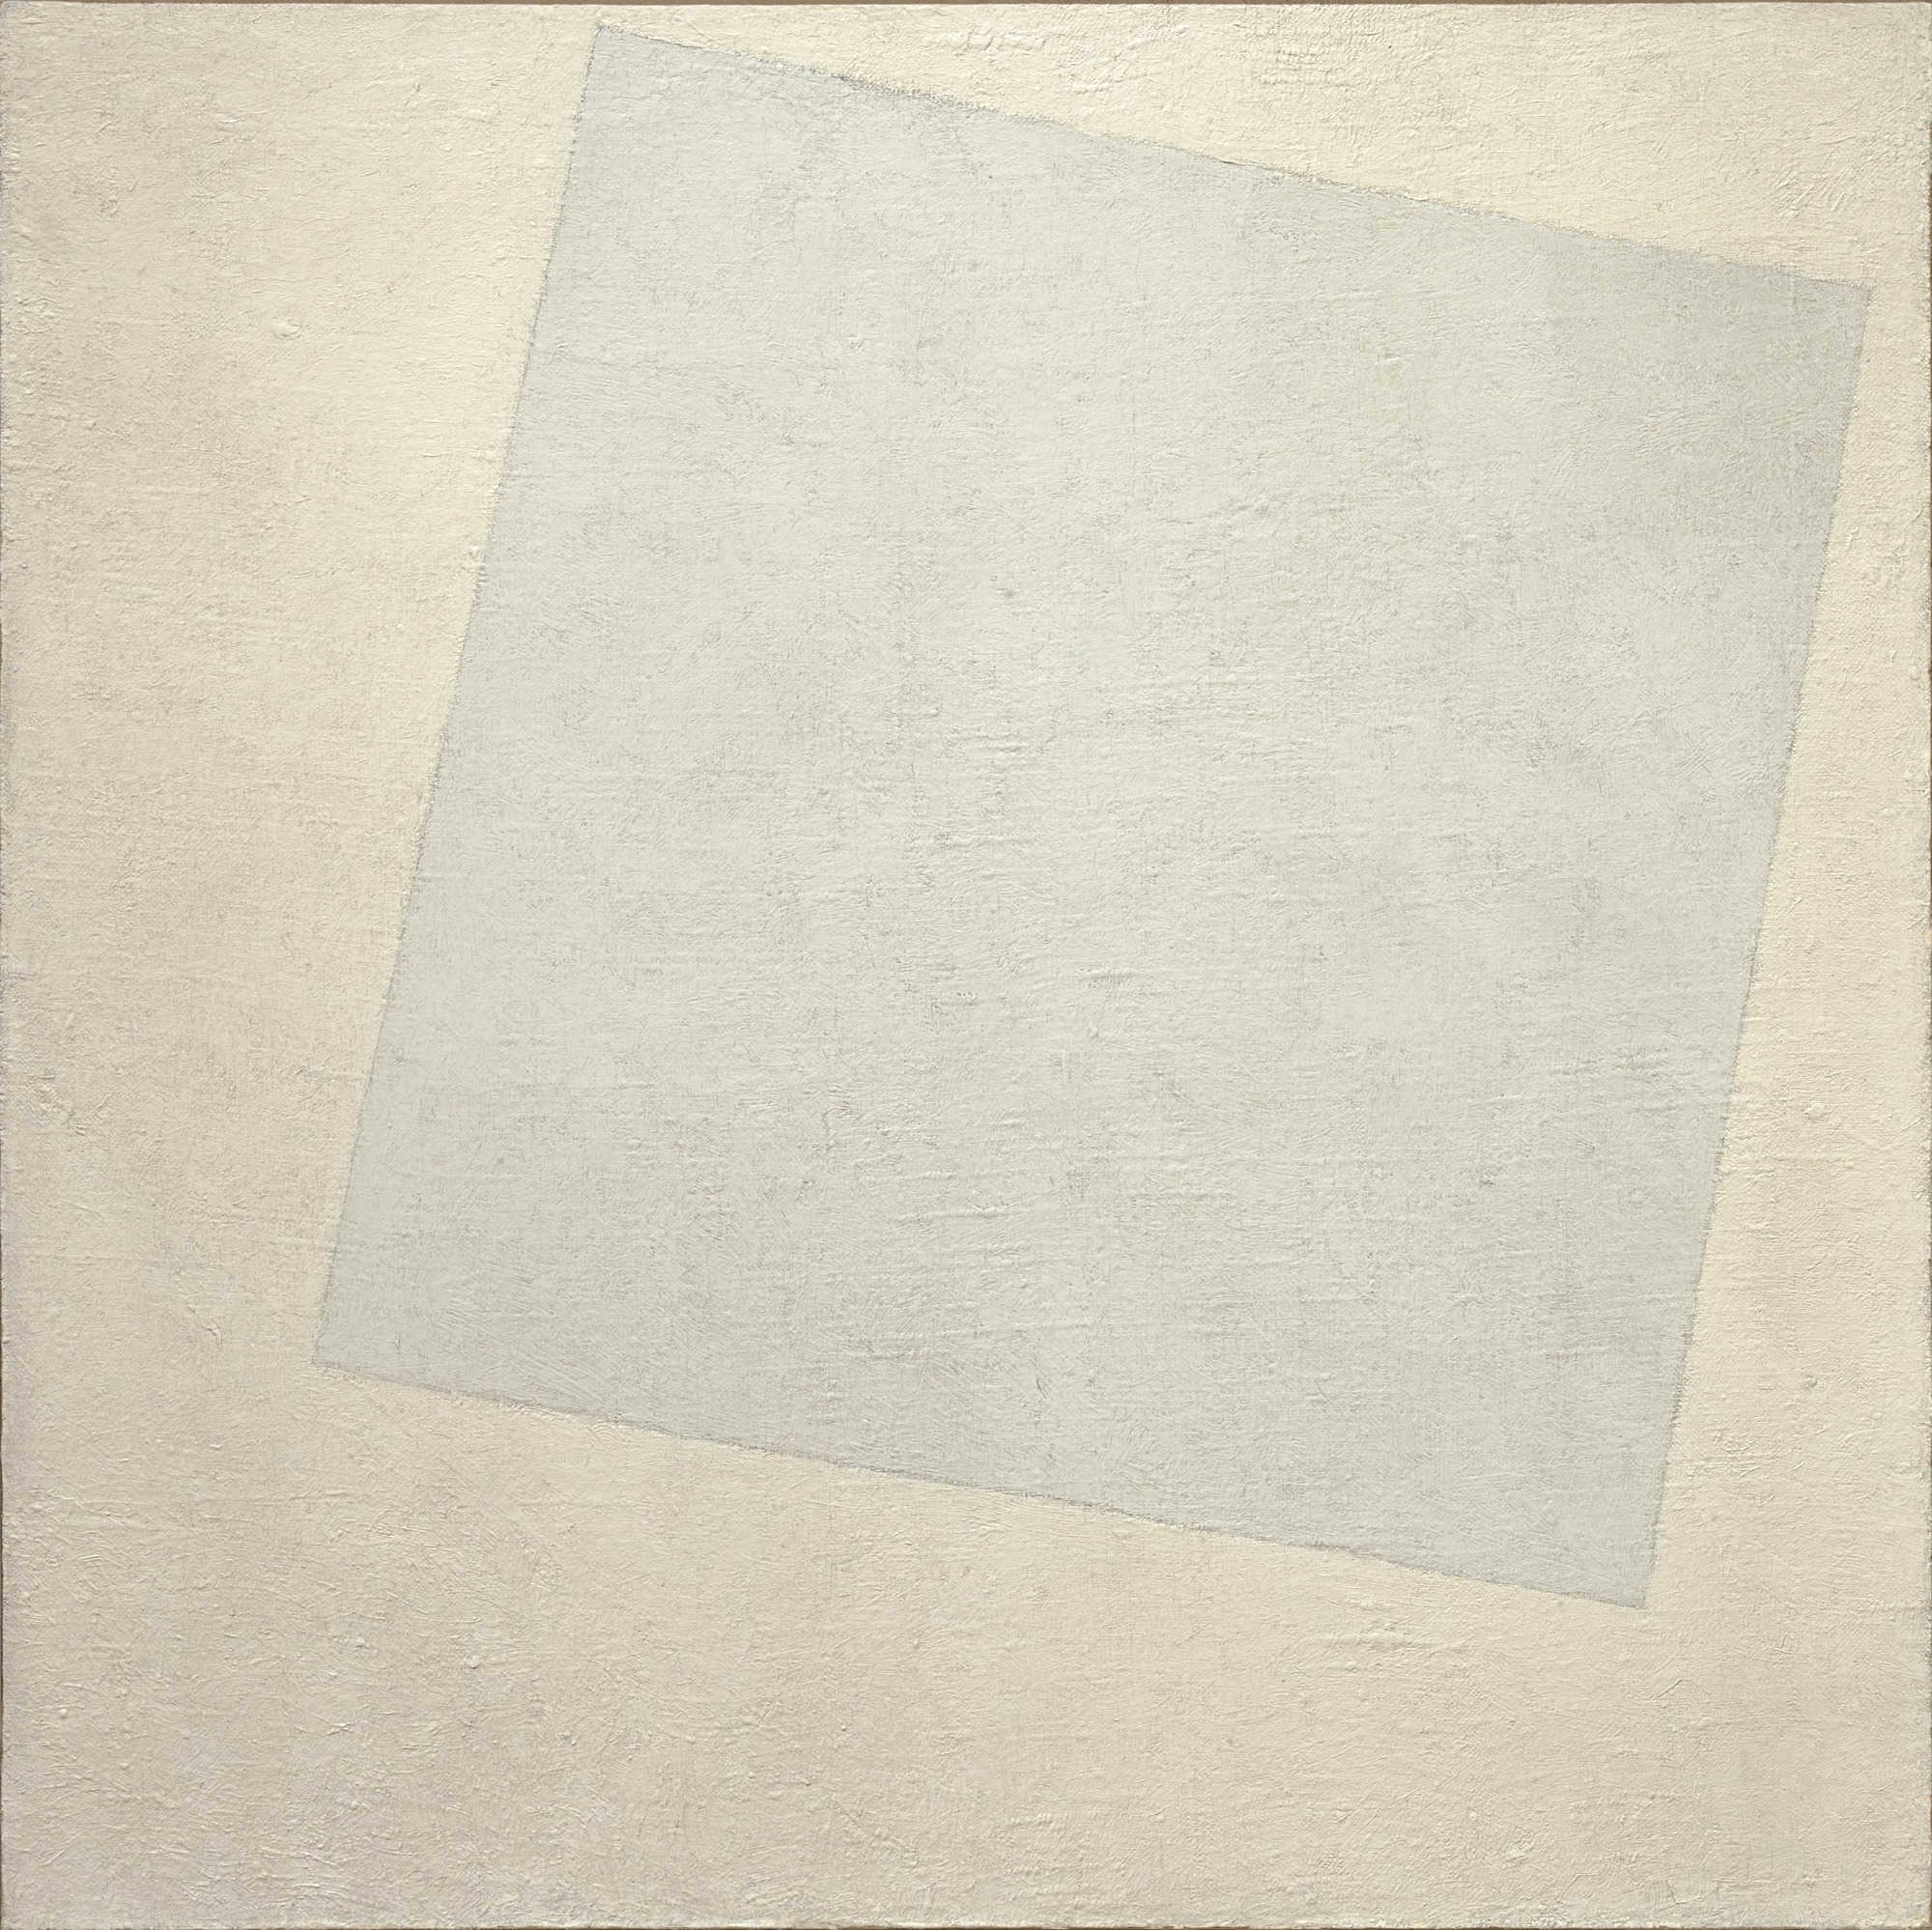 Kazimir_Malevich, Composizione suprematista: Bianco su bianco (1918)